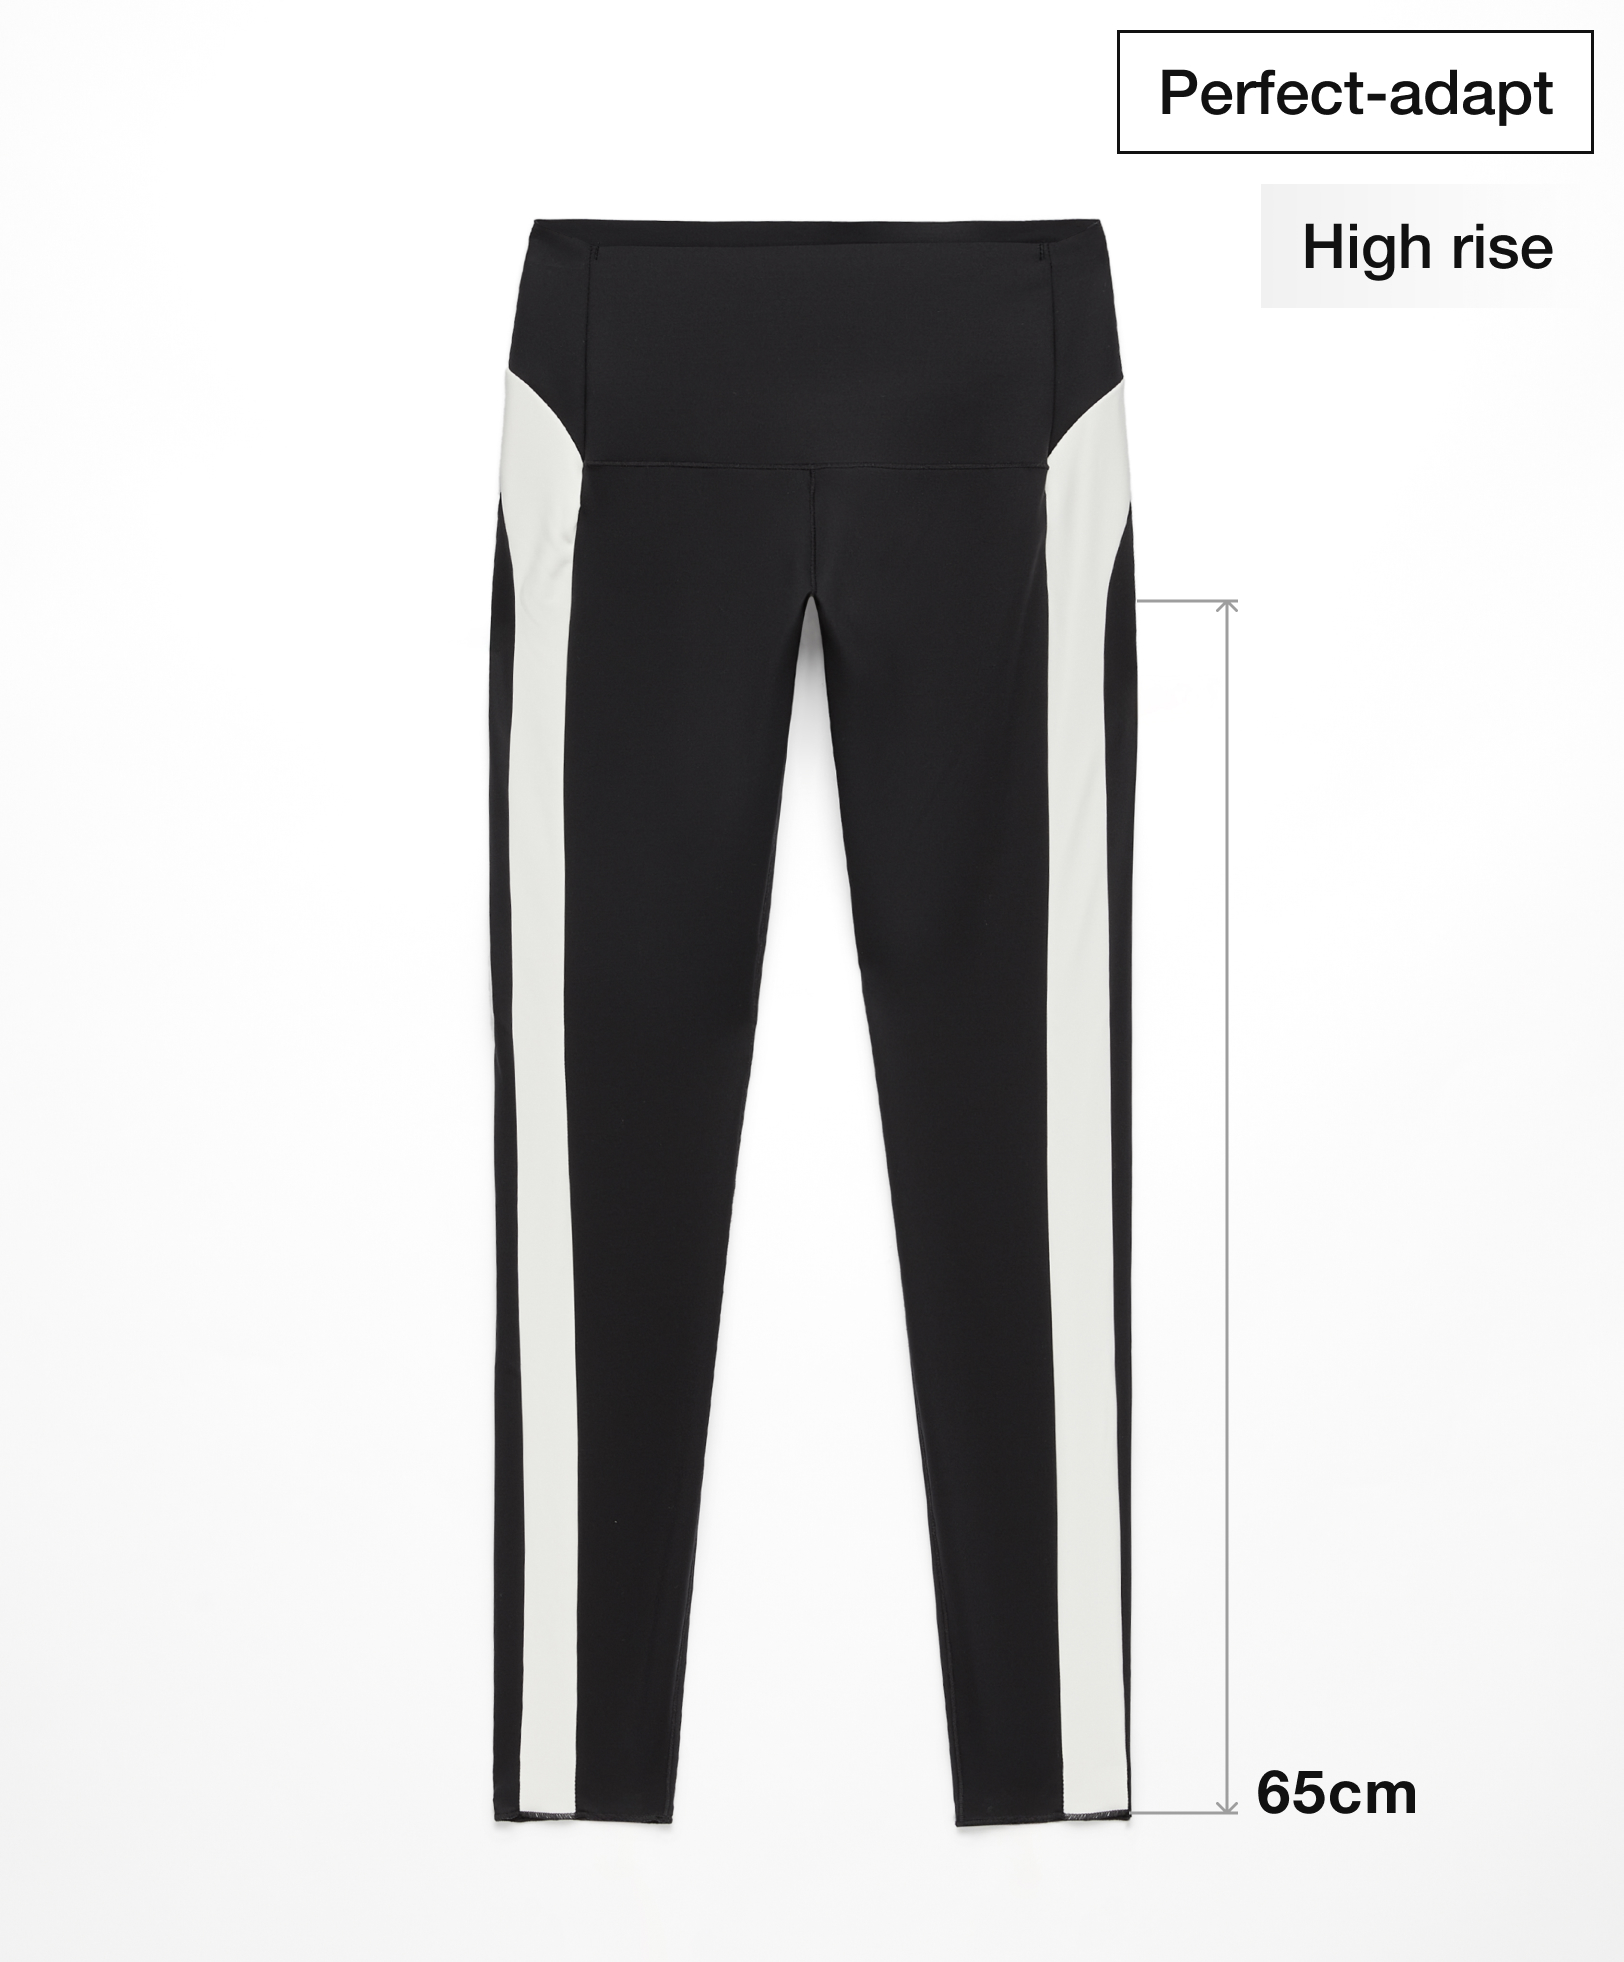 Perfect-adapt ankle-length 65cm leggings